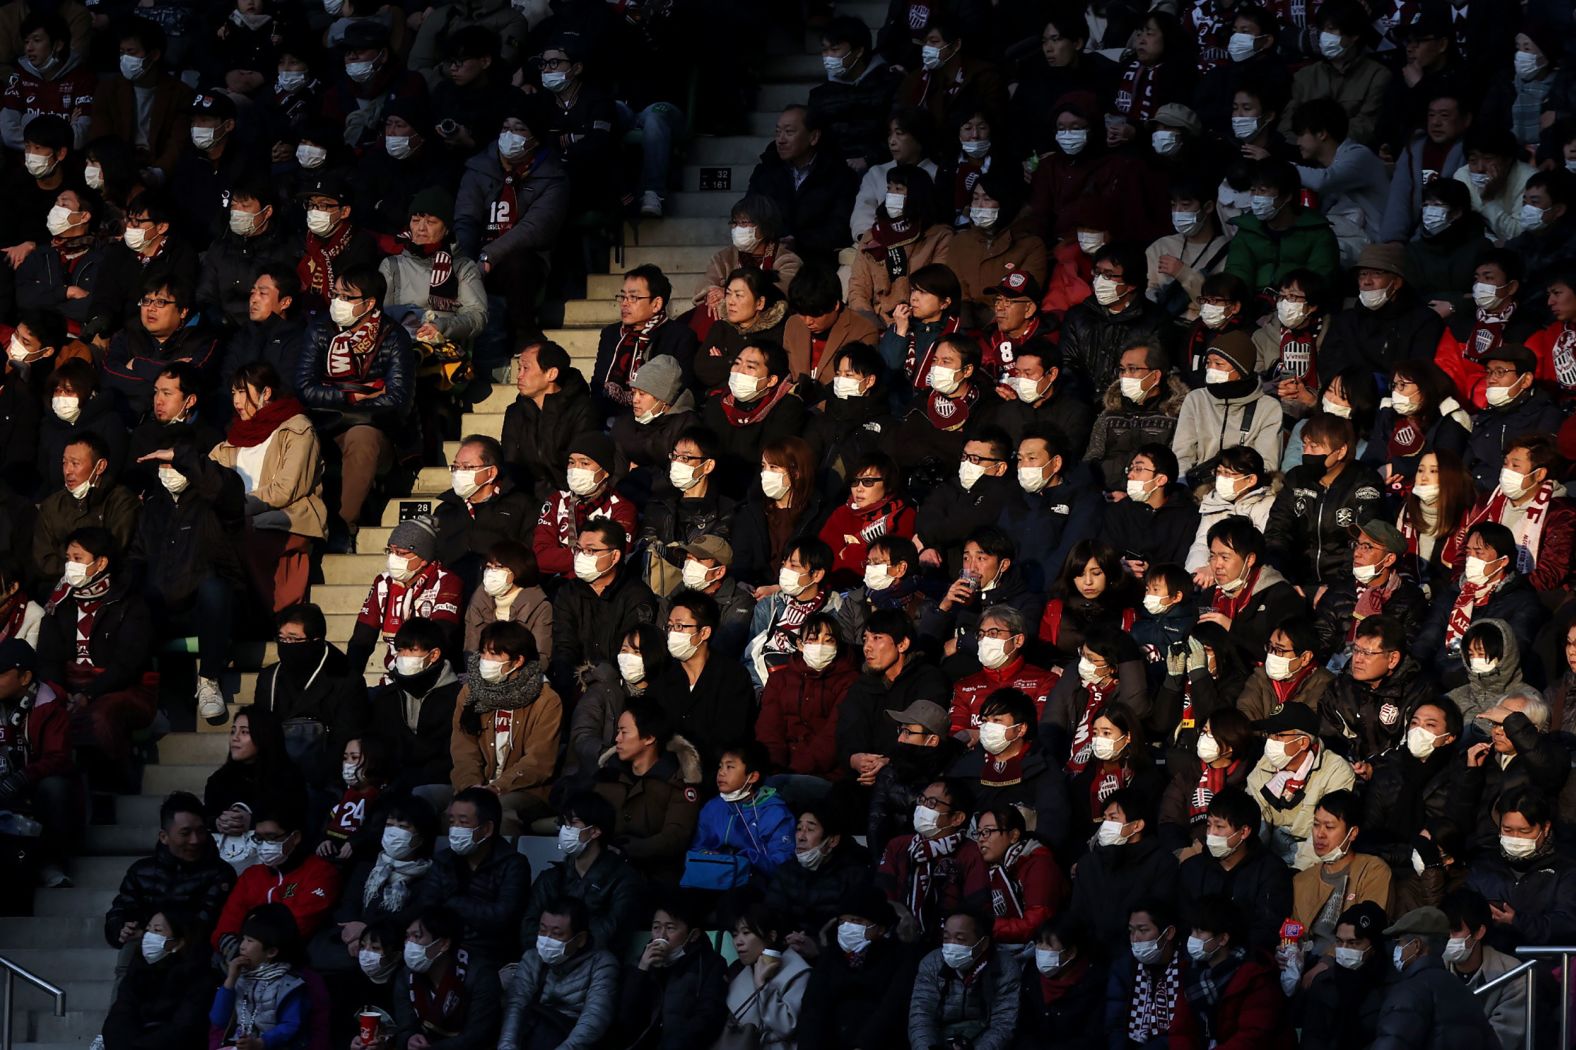 People attend a professional soccer match in Kobe, Japan, on February 23, 2020. To help stop the spread of the novel coronavirus, the soccer club Vissel Kobe <a href="https://www.espn.com/soccer/vissel-kobe/story/4057914/iniestas-vissel-kobe-ban-singing-chanting-due-to-coronavirus-threat" target="_blank" target="_blank">told fans not to sing, chant or wave flags</a> in the season opener against Yokohama FC.